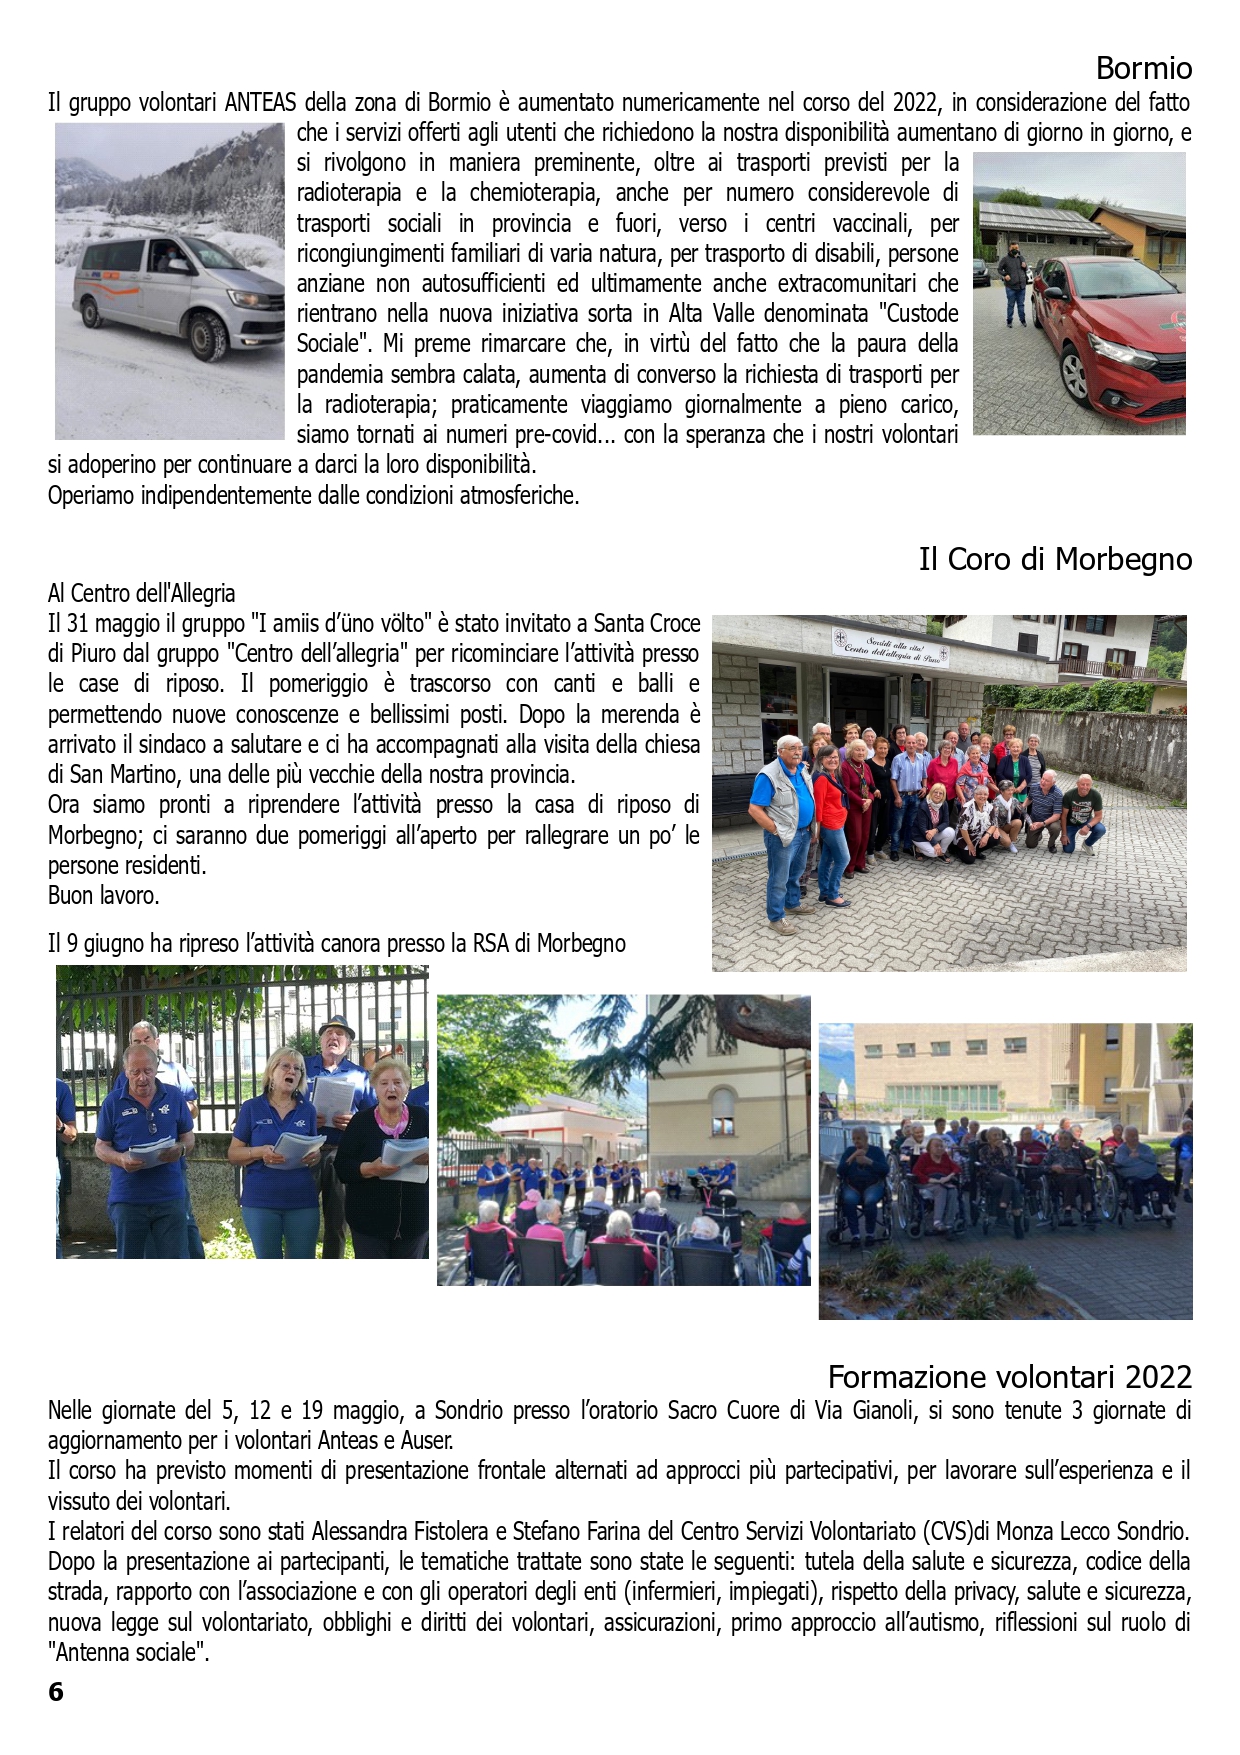 2022-06 Notiziario_pages-to-jpg-0006